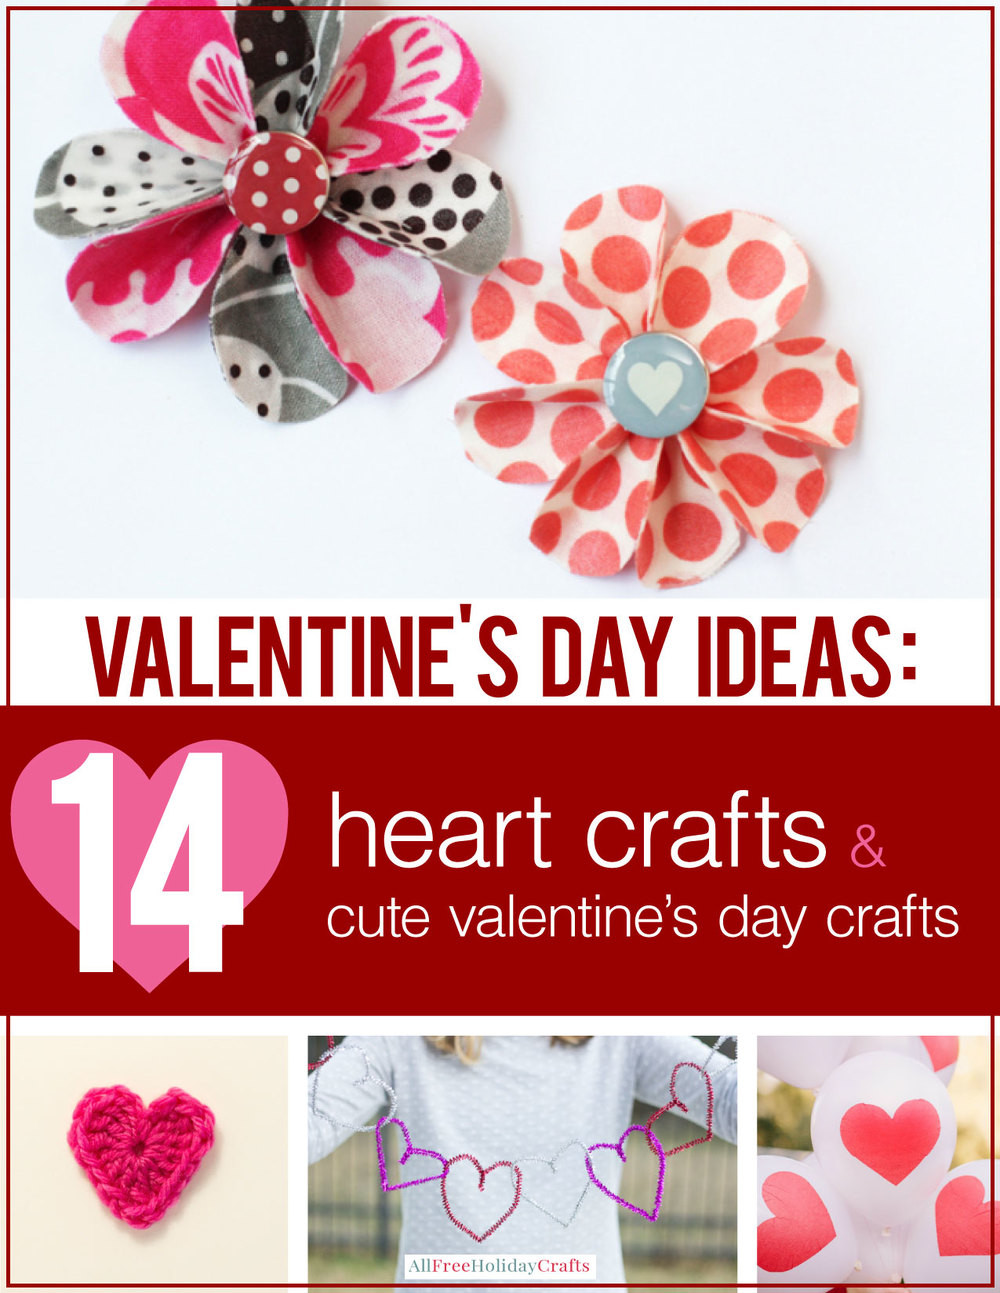 Cute Valentines Day Crafts
 "Valentine s Day Ideas 14 Heart Crafts and Cute Valentine